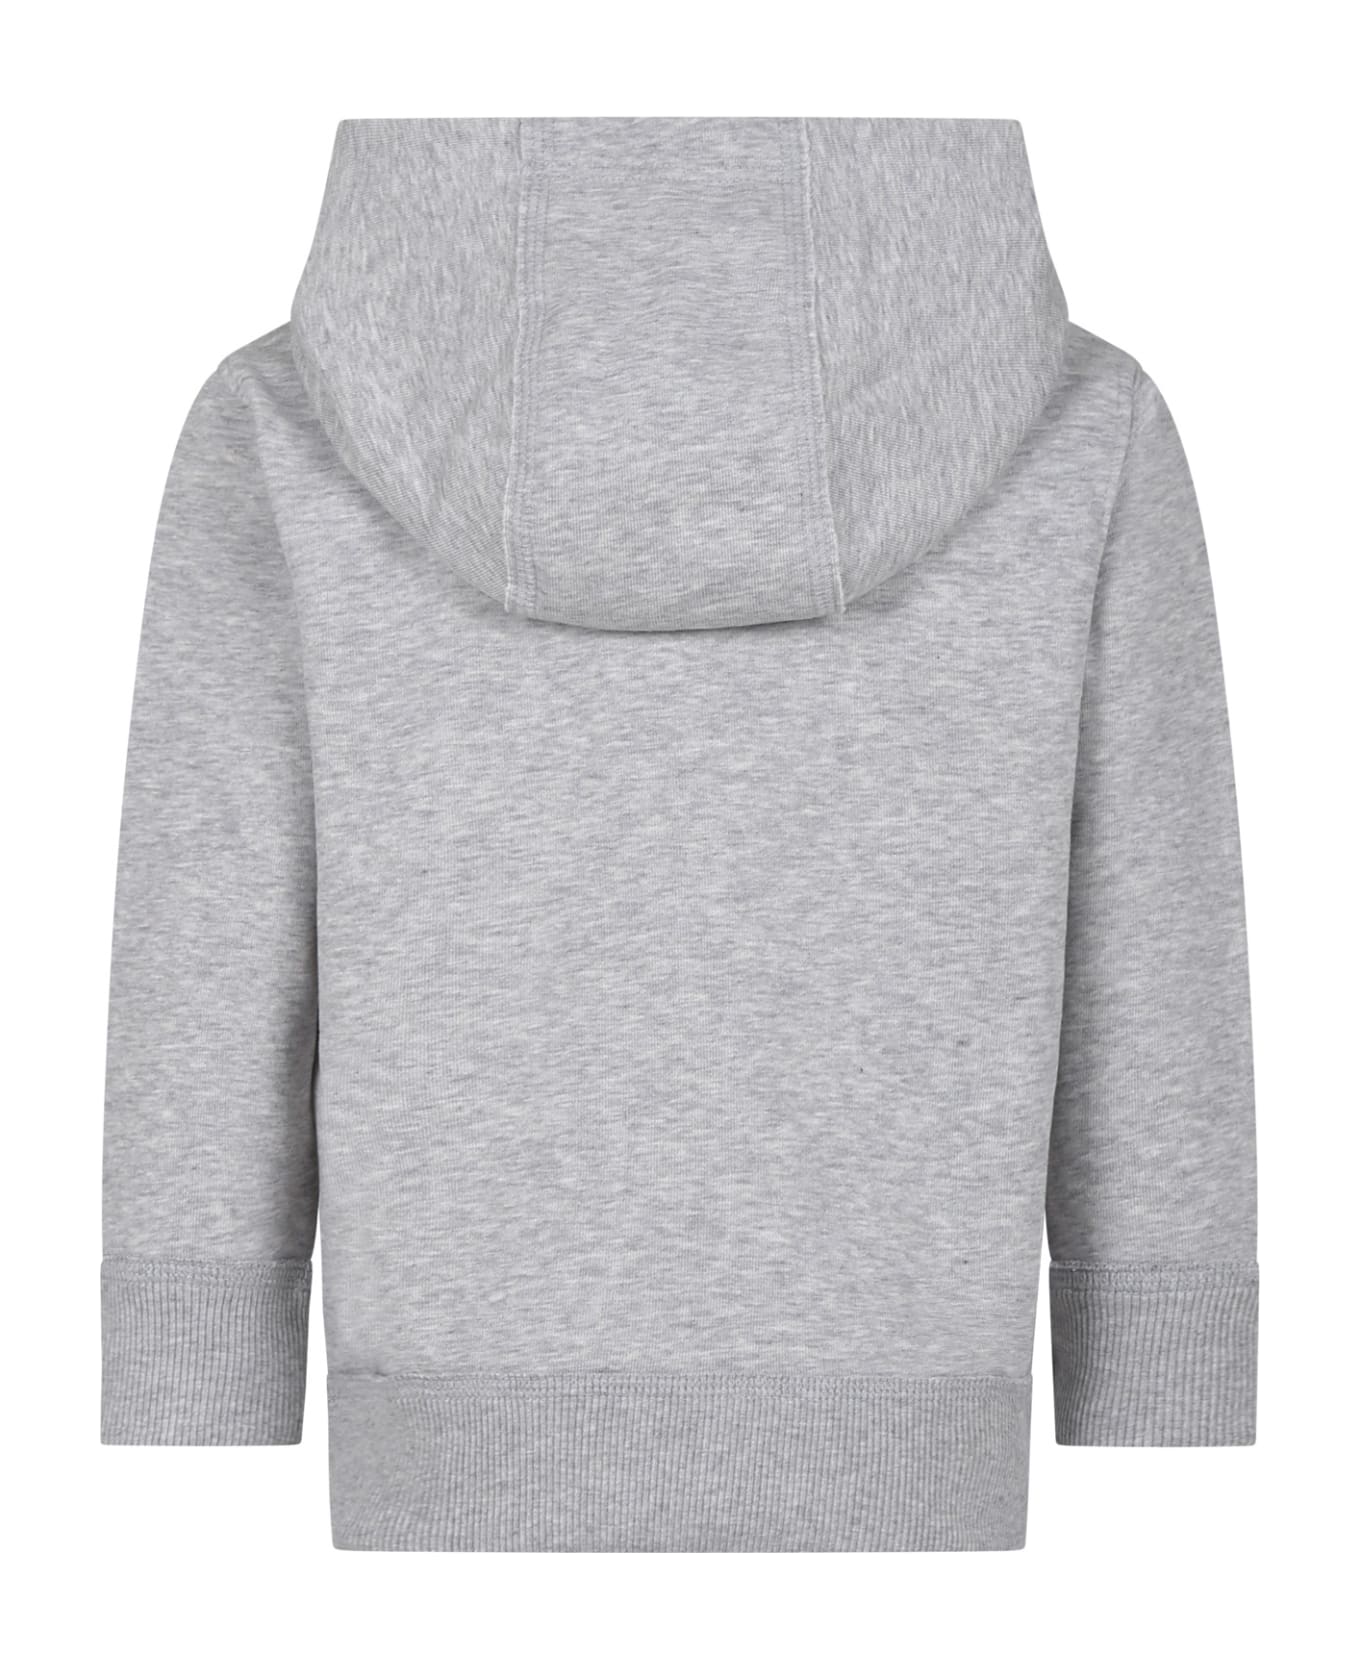 Givenchy Gray Sweatshirt For Boy With Logo - Grey